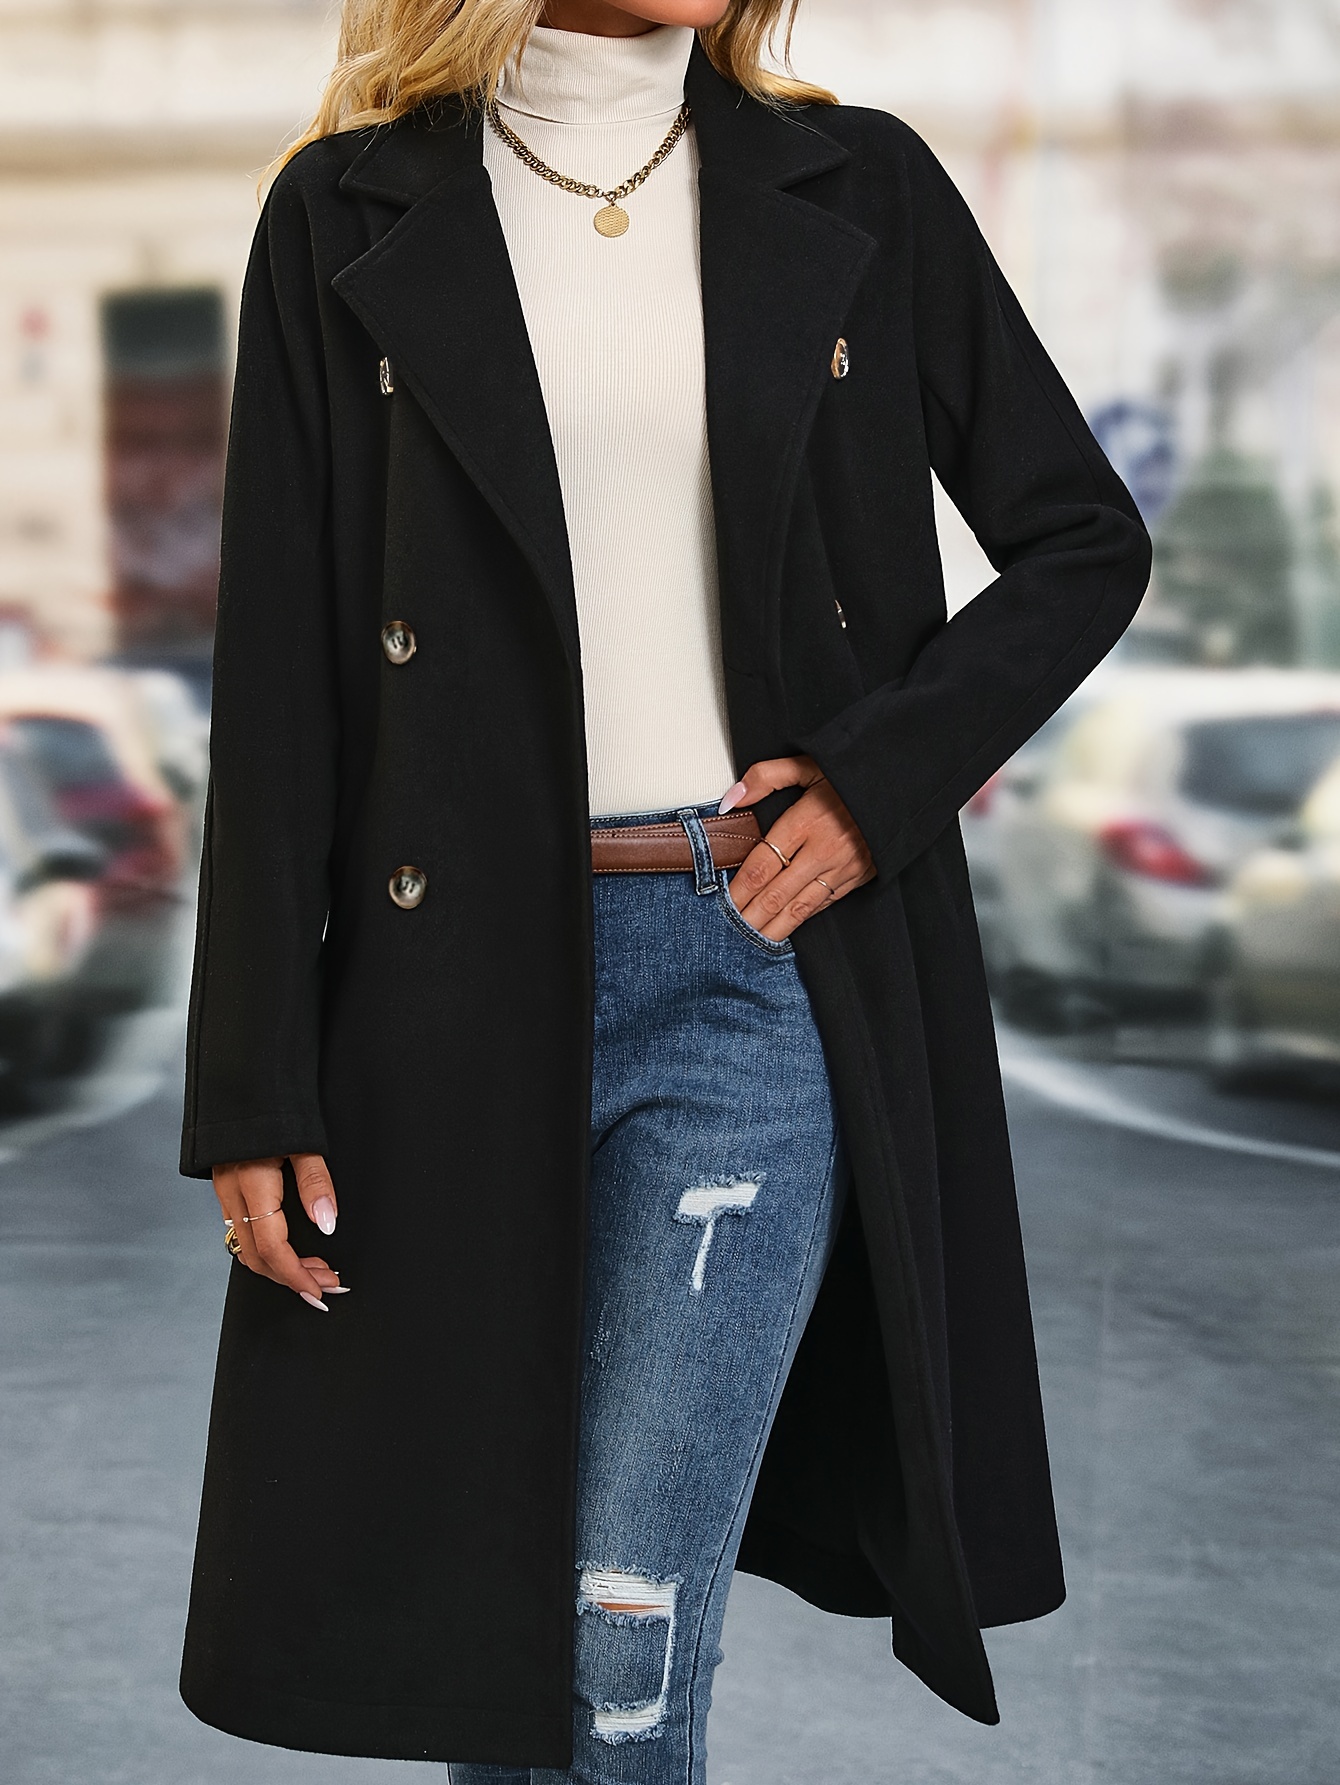 Wool Jackets & Coats for Women, Shop All Outerwear